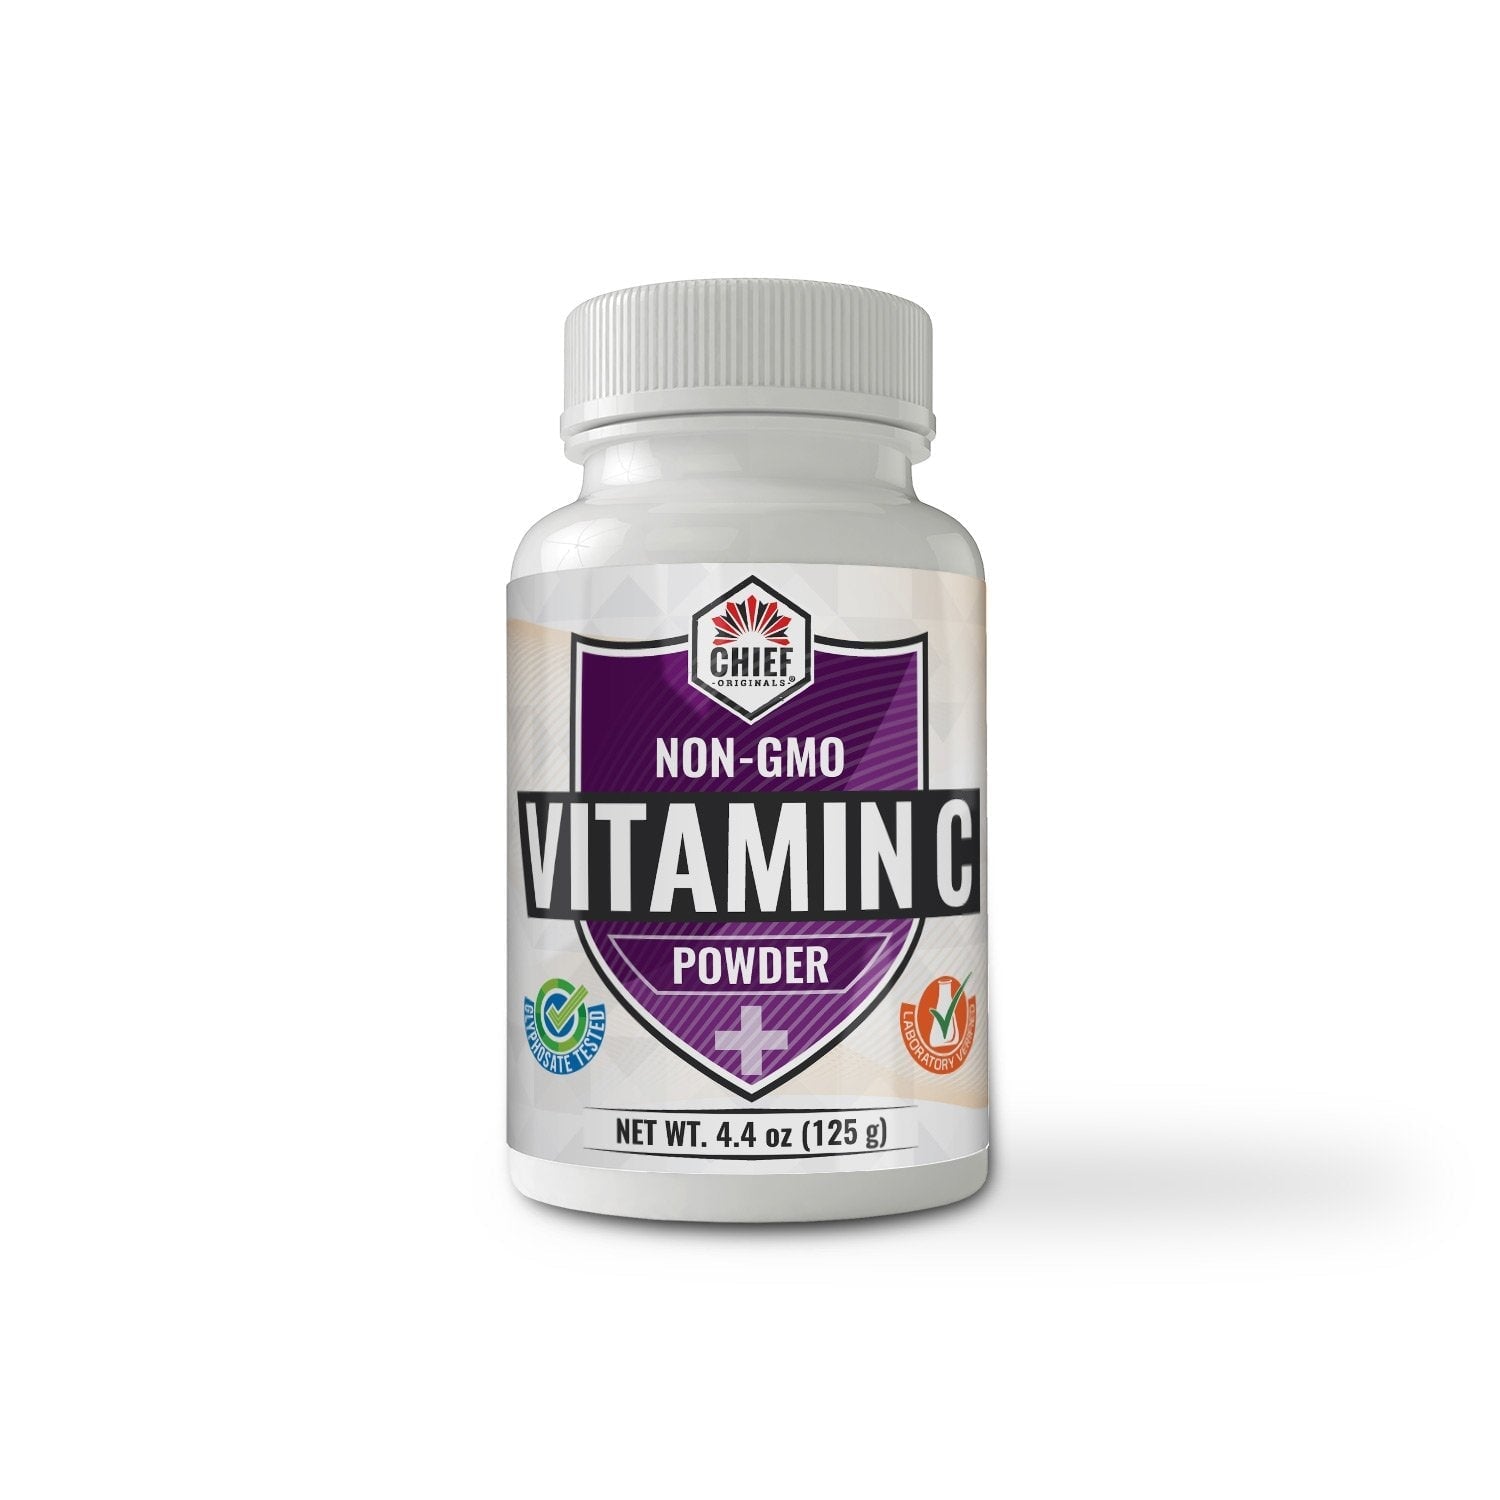 Non-GMO Vitamin C Powder 4.4oz (125g) Supplements Brighteon Store 